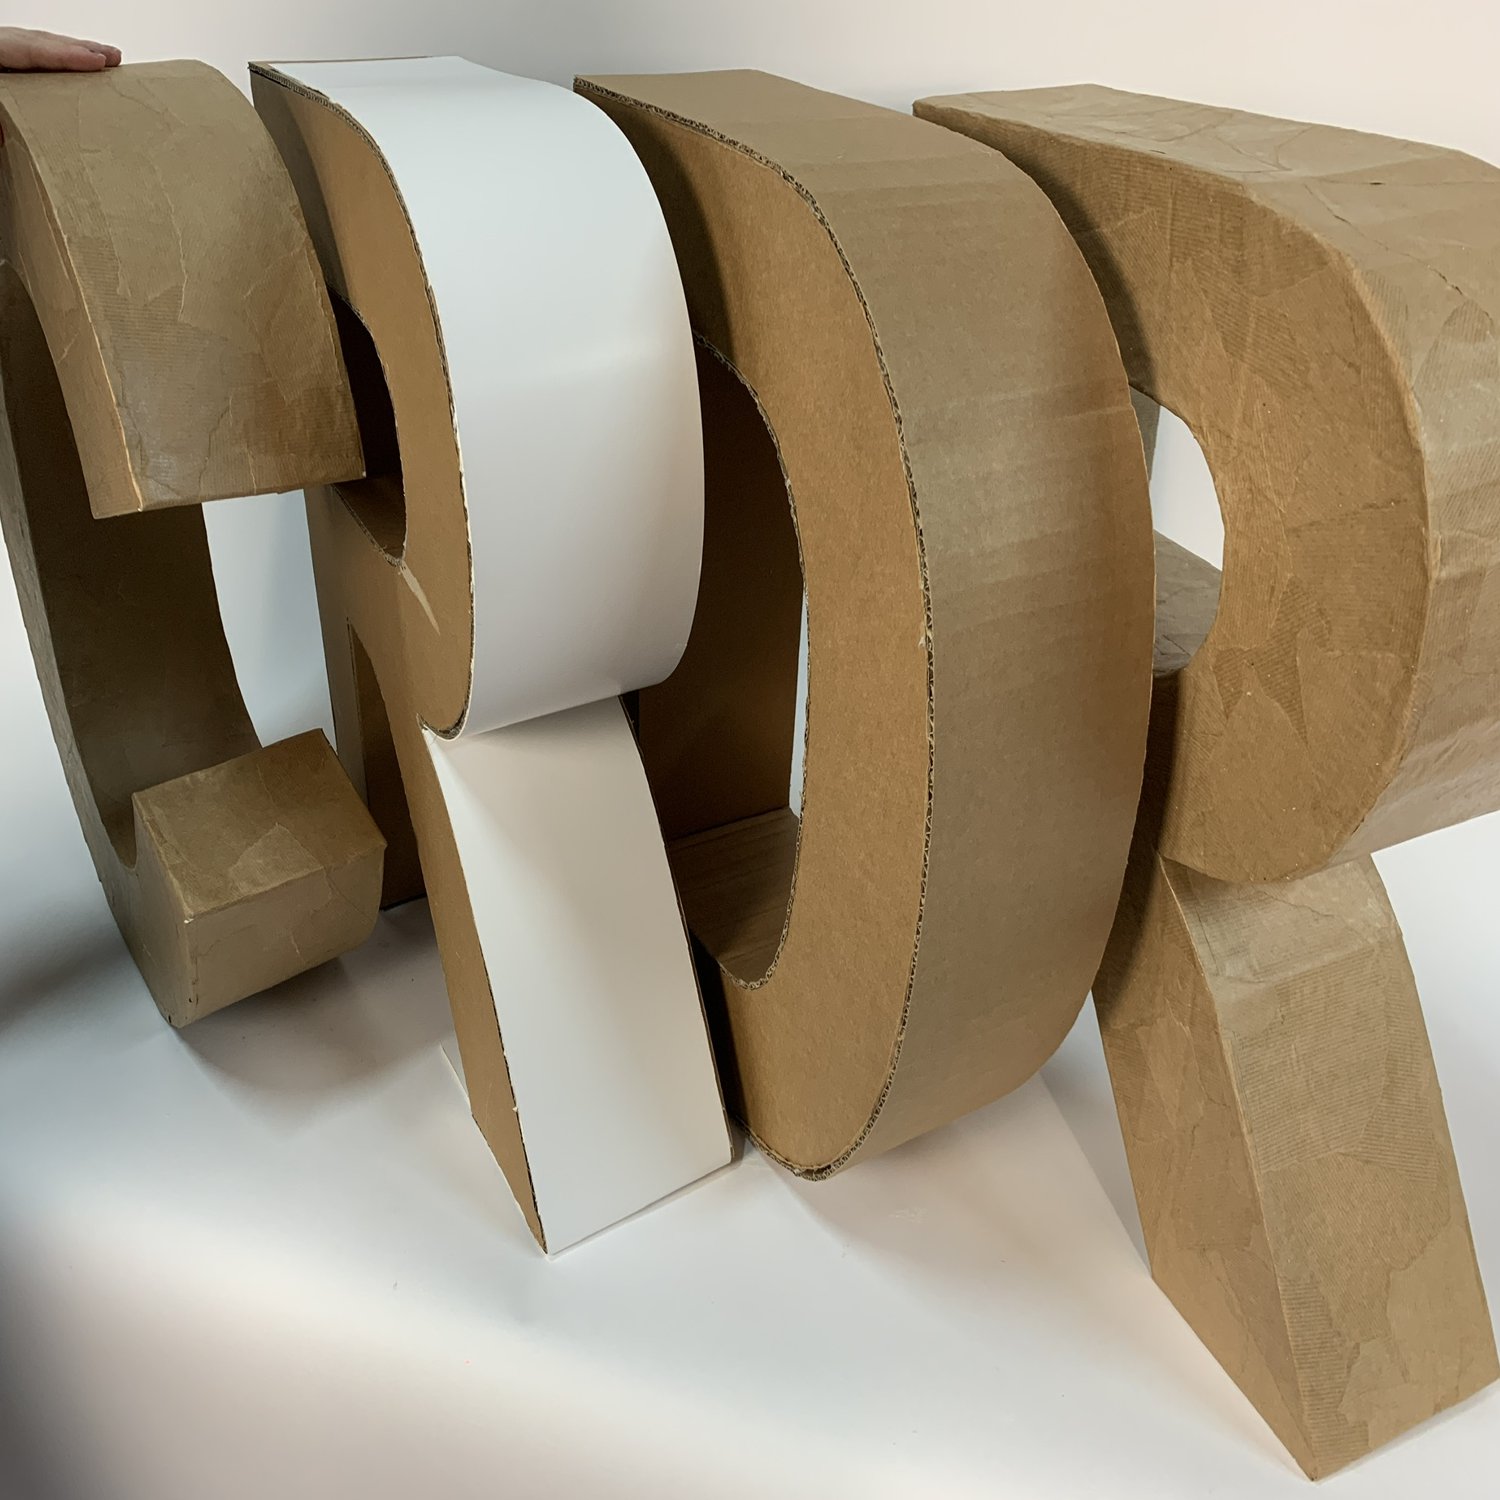 Large Cardboard 3d Letters, UK Manufactured